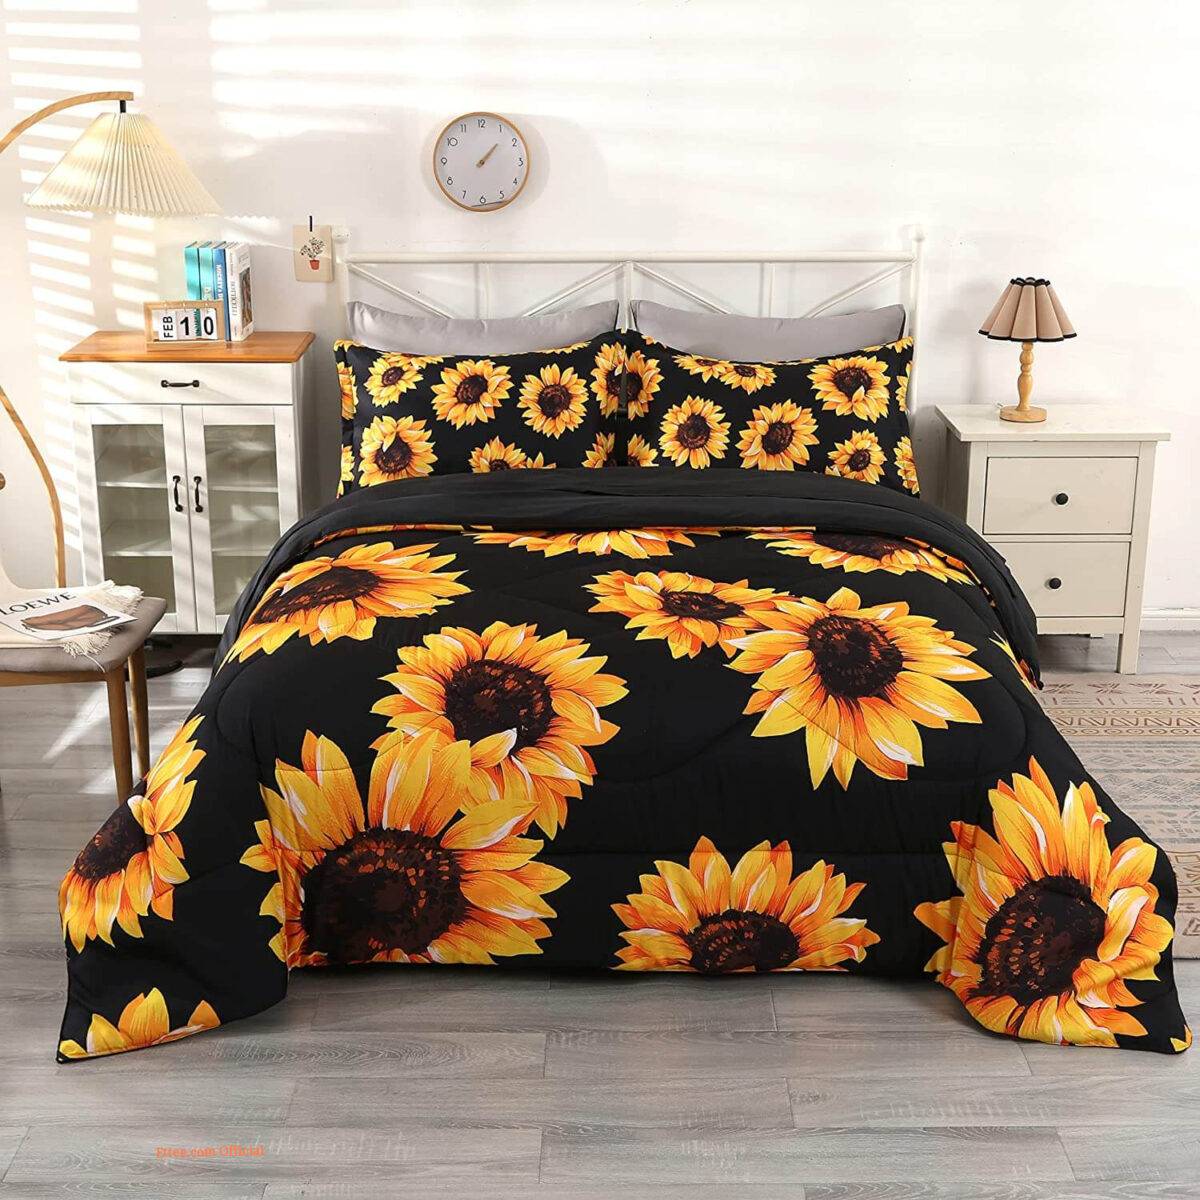 Wowelife Sunflower Comforter Twin Black Bedding Set - King - Ettee